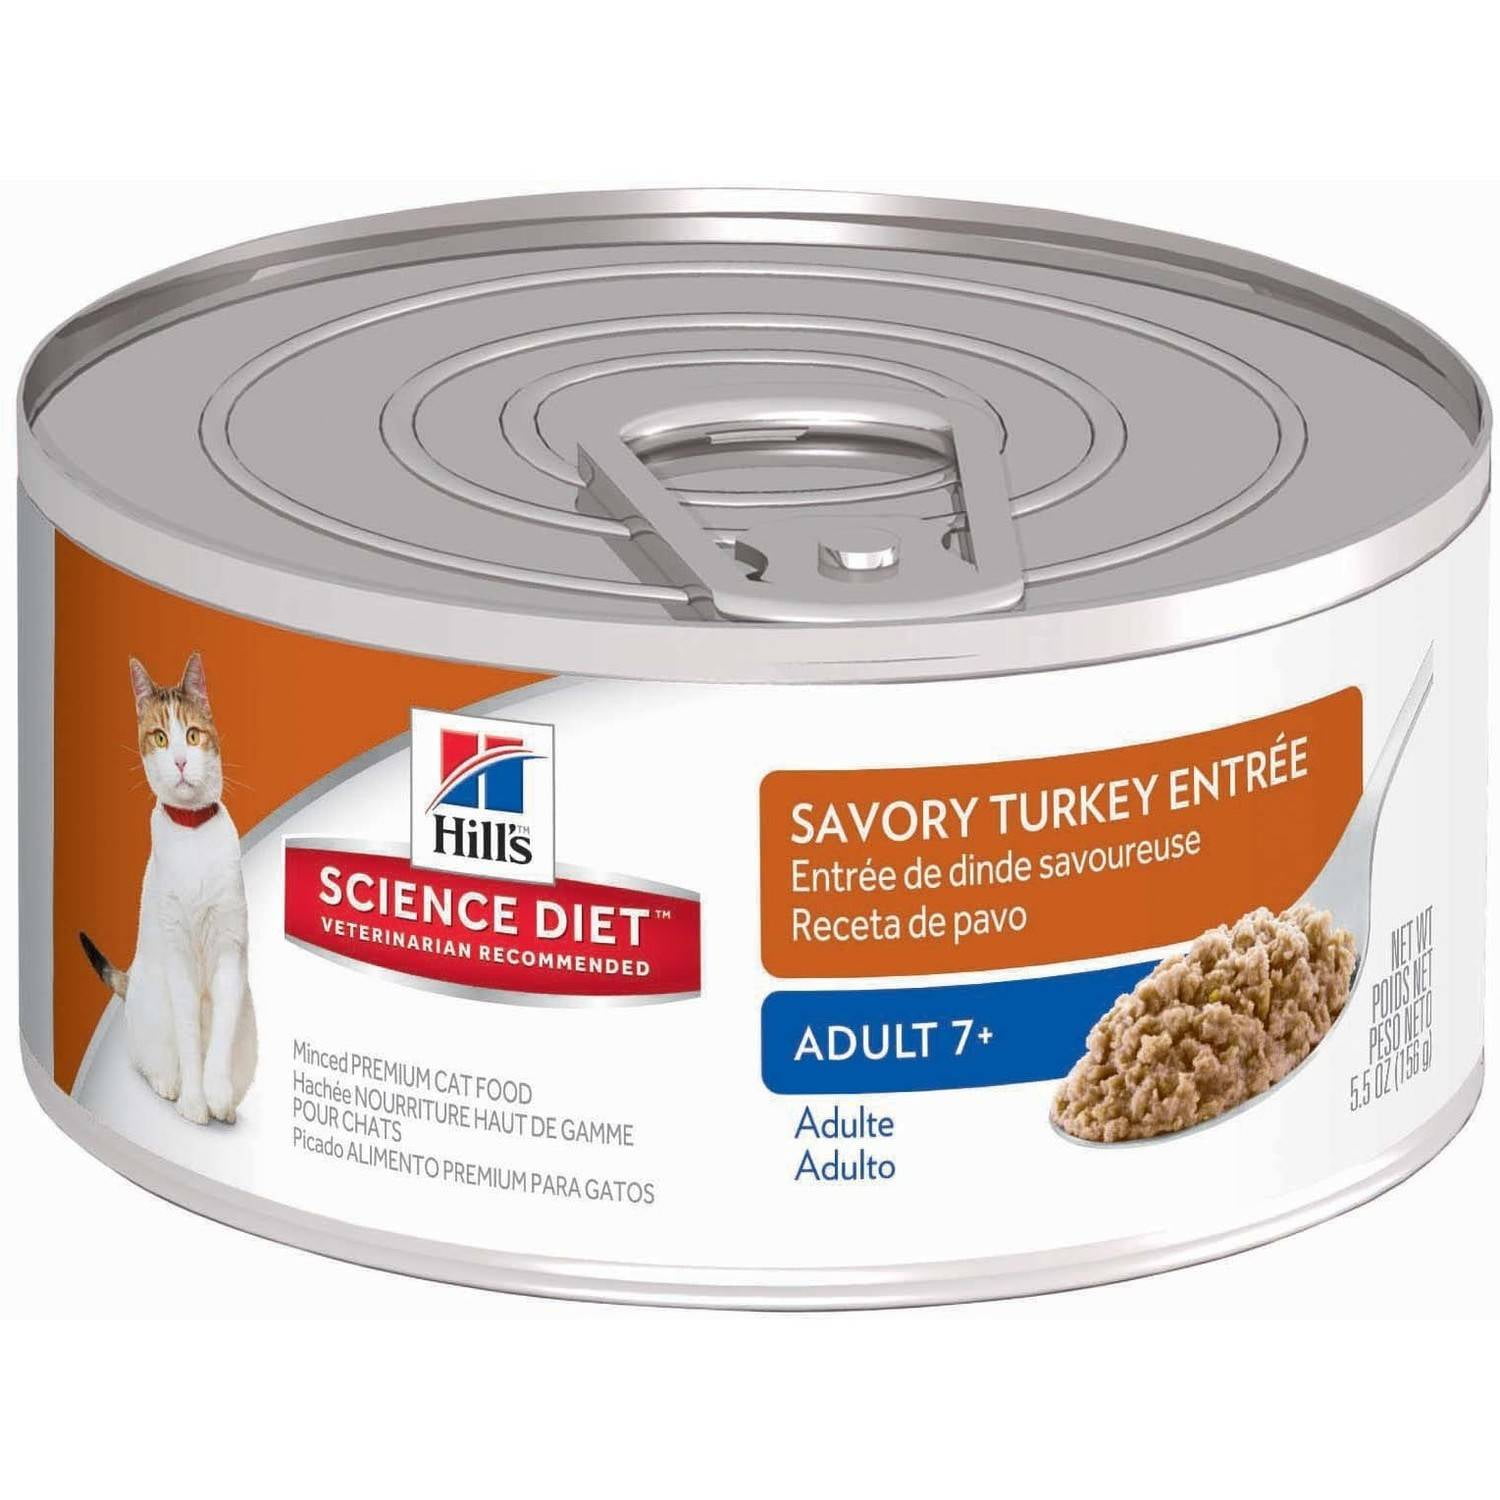 (4 Pack) Hills Science Diet Adult Savory Turkey Entree Minced Premium